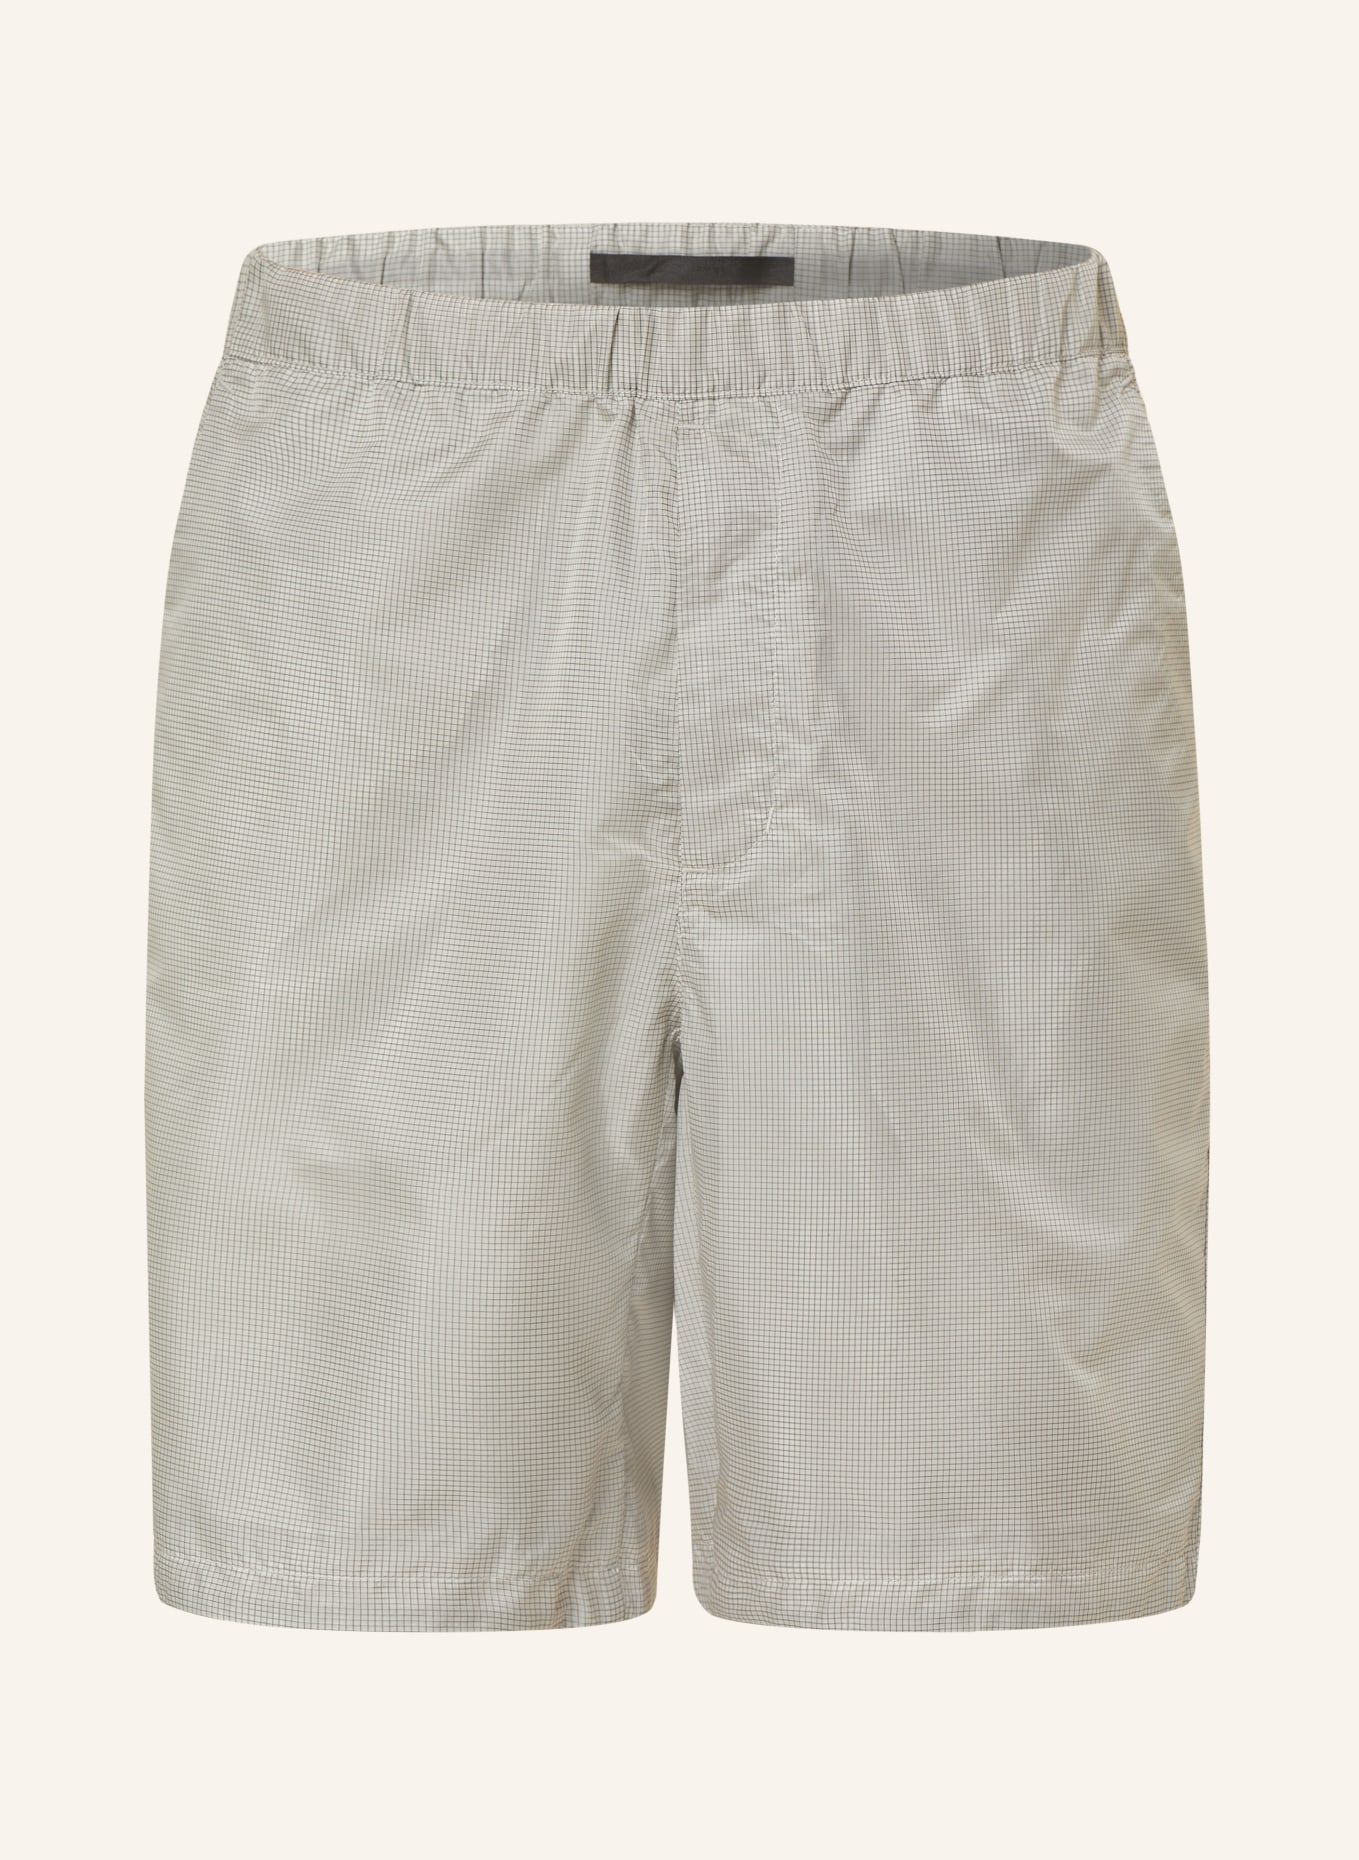 NORSE PROJECTS Shorts PASMO, Farbe: HELLGRAU/ BLAUGRAU (Bild 1)